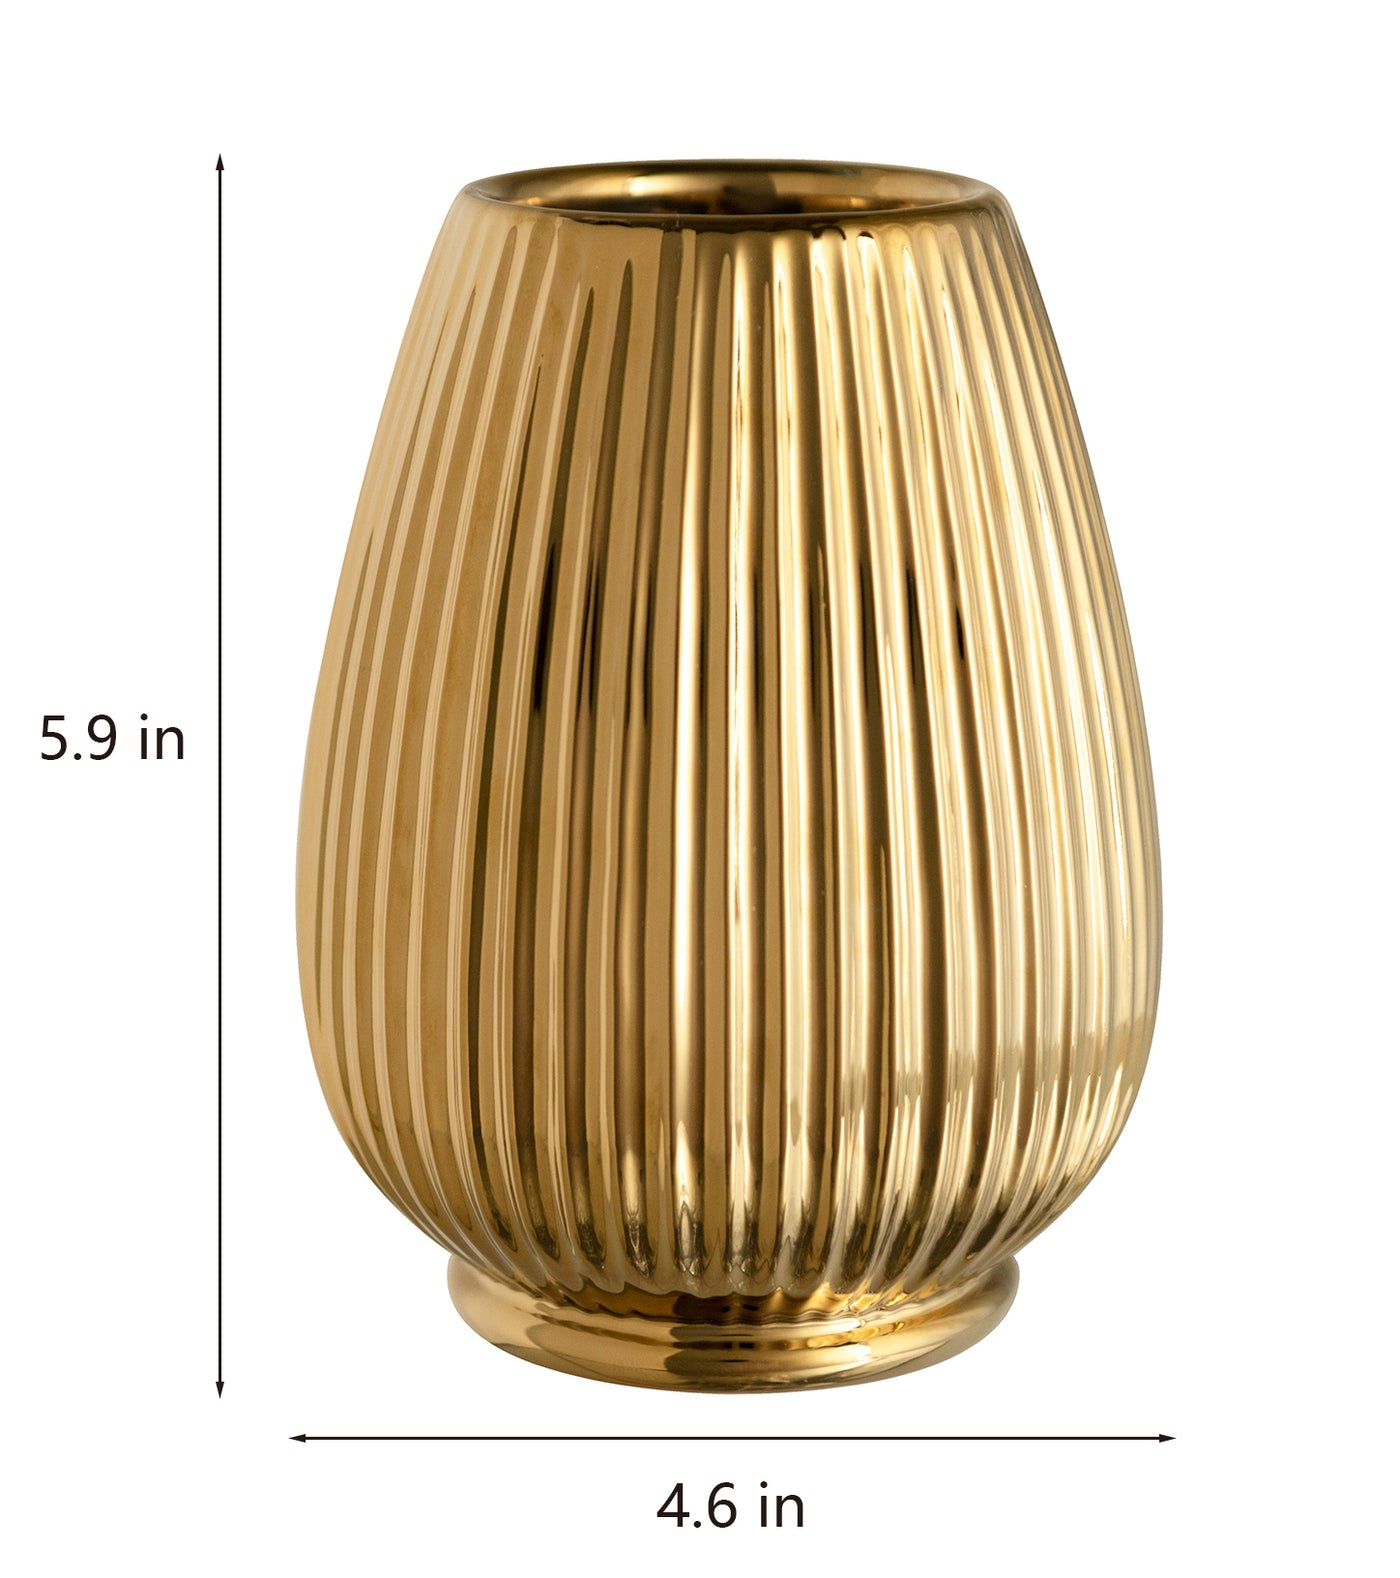 Gold Metallic Ceramic Vases - 3 Styles